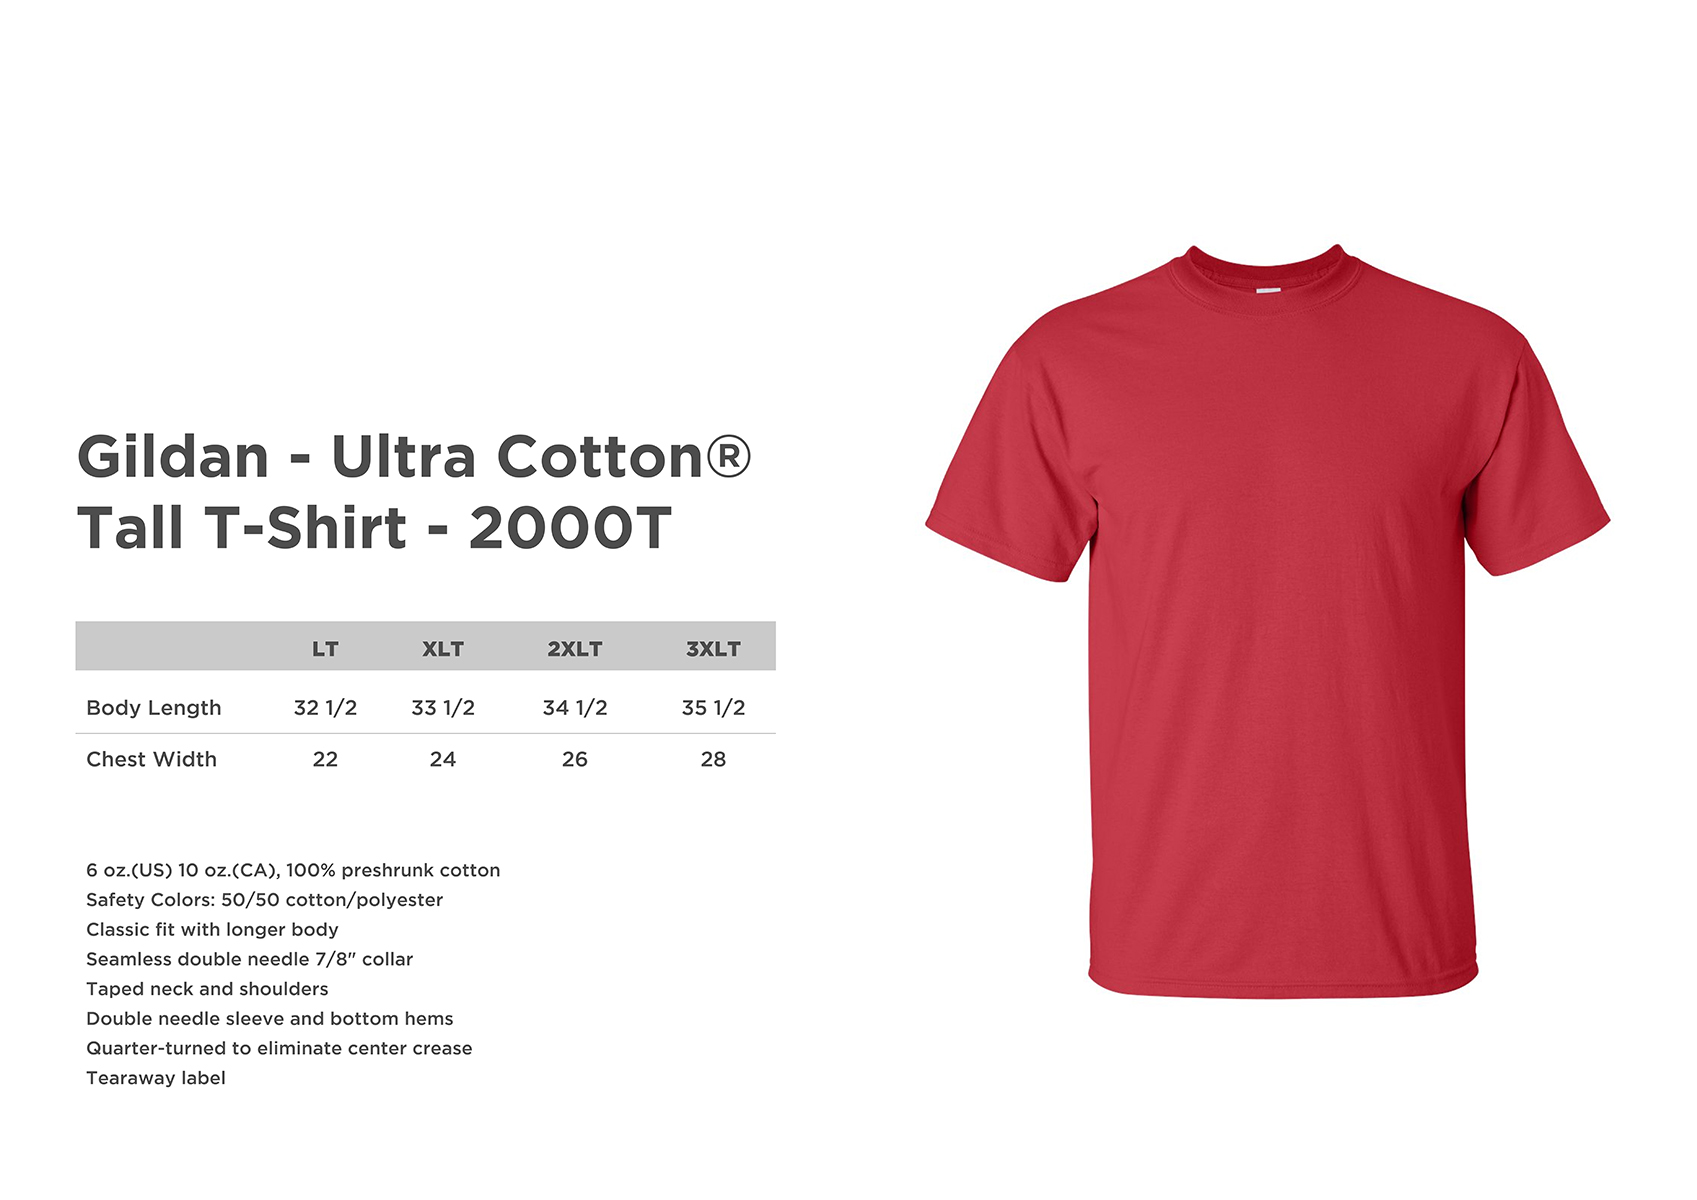 Gildan Ultra Cotton Tall T-Shirt - 2000T Safety Green T shirts XLT T Shirts for Men 2XLT 3XLT Big & Tall T Shirts Tall Mens Shirts Big & Tall T Shirts Big and Tall T Shirt for Men Tall Sizes - image 2 of 2